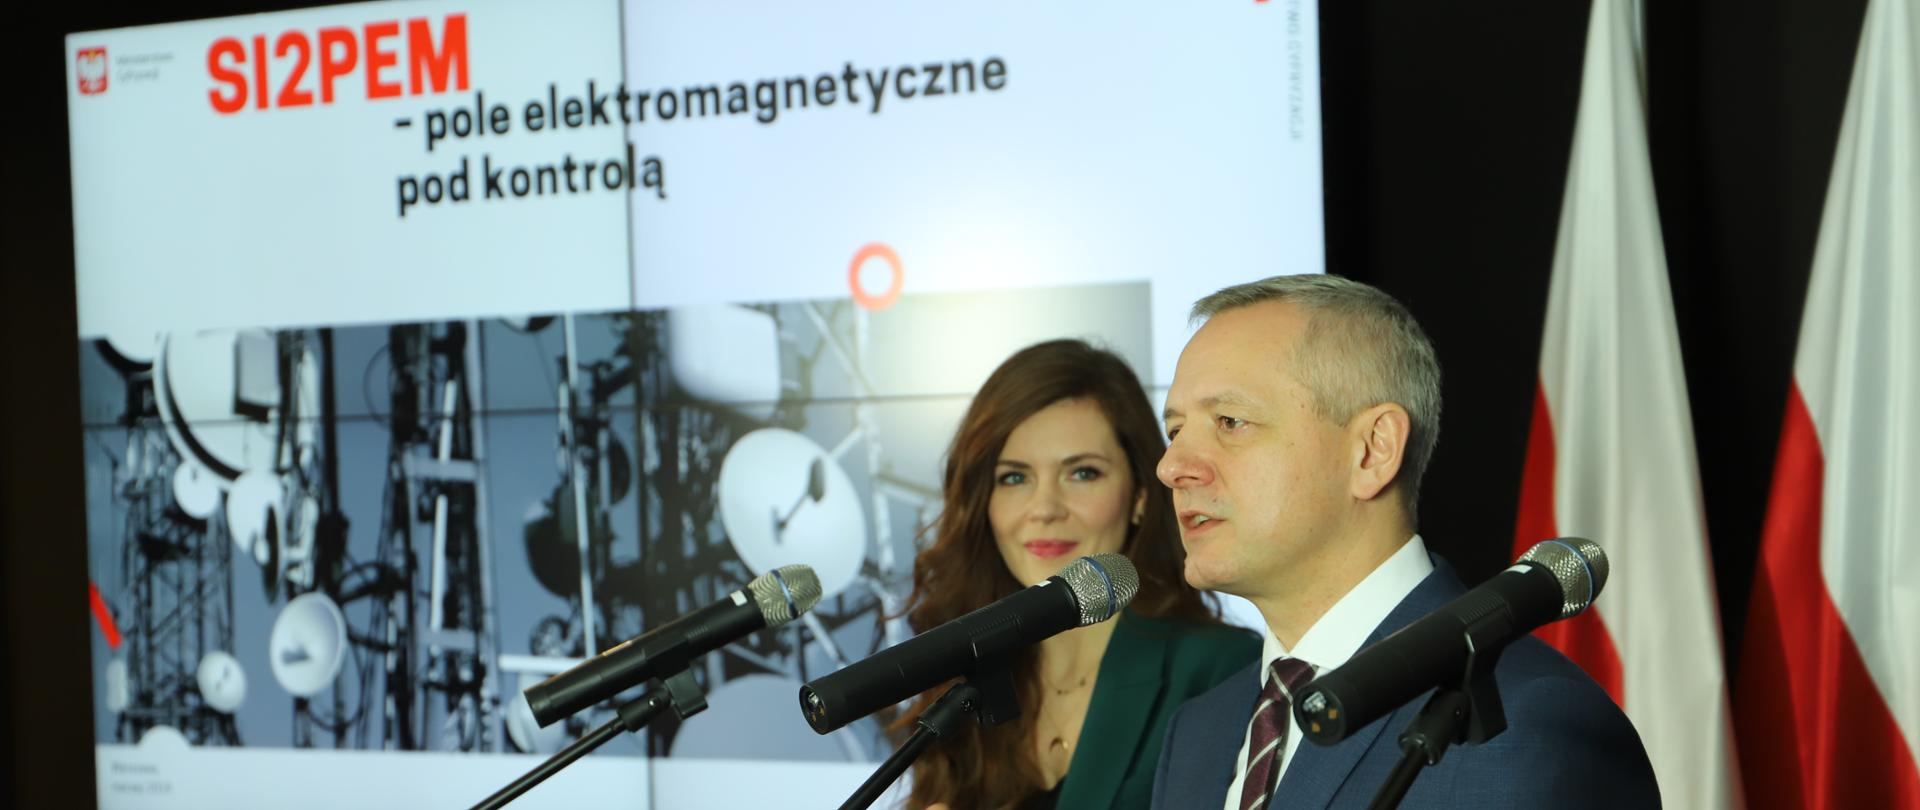 Minister Marek Zagórski i minister Wanda Buk na konferencji prasowej. W tle ekran z napisem "SI2PEM - pole elektromagnetyczne pod kontrolą".